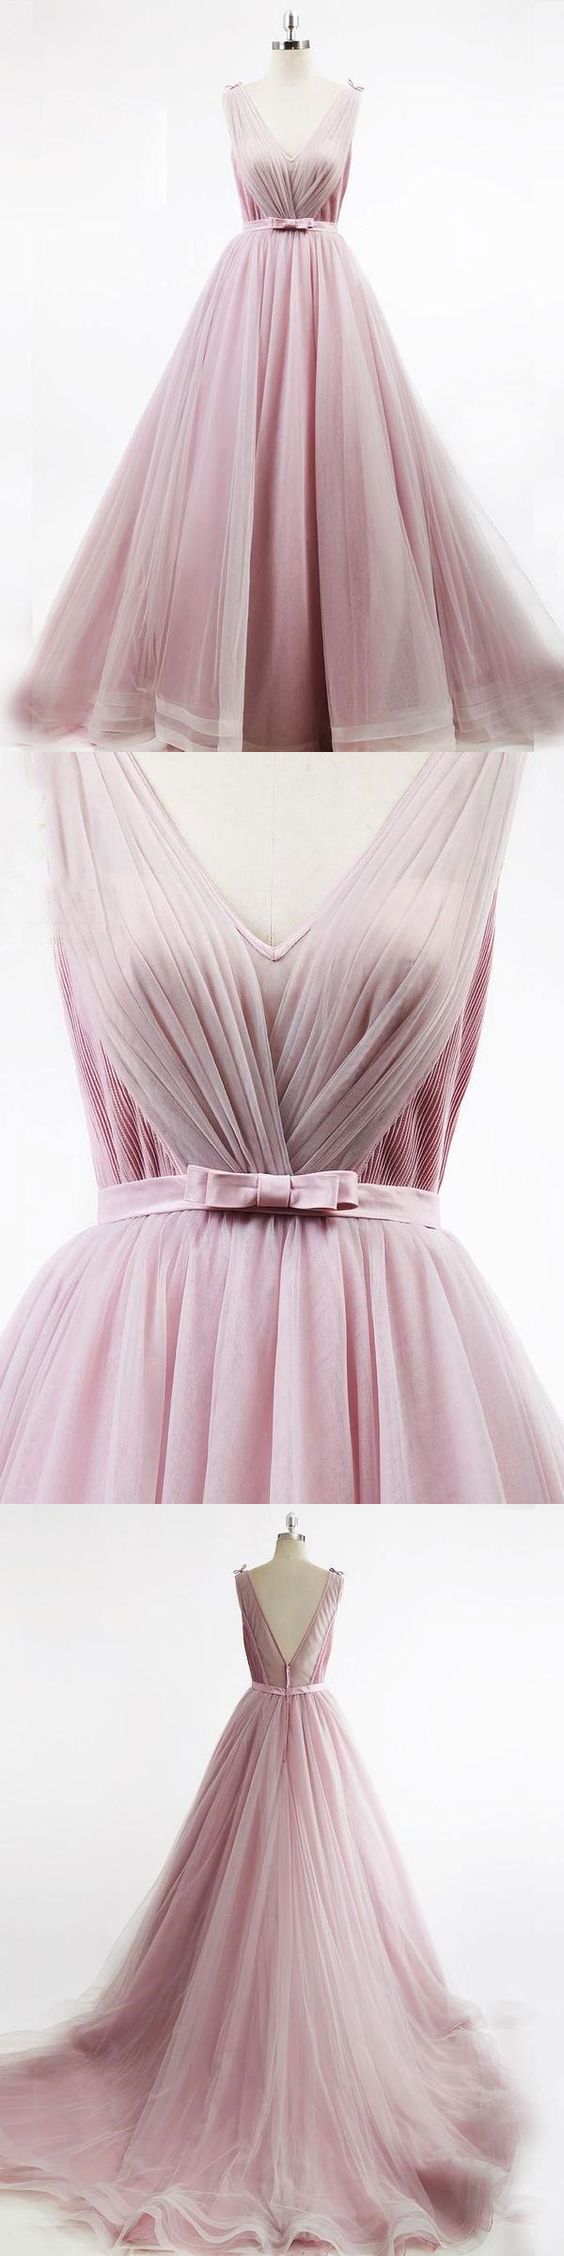 Chic A-line V Neck Tulle Prom Dress Simple Pink Evening Dresses Formal Dresses M5818